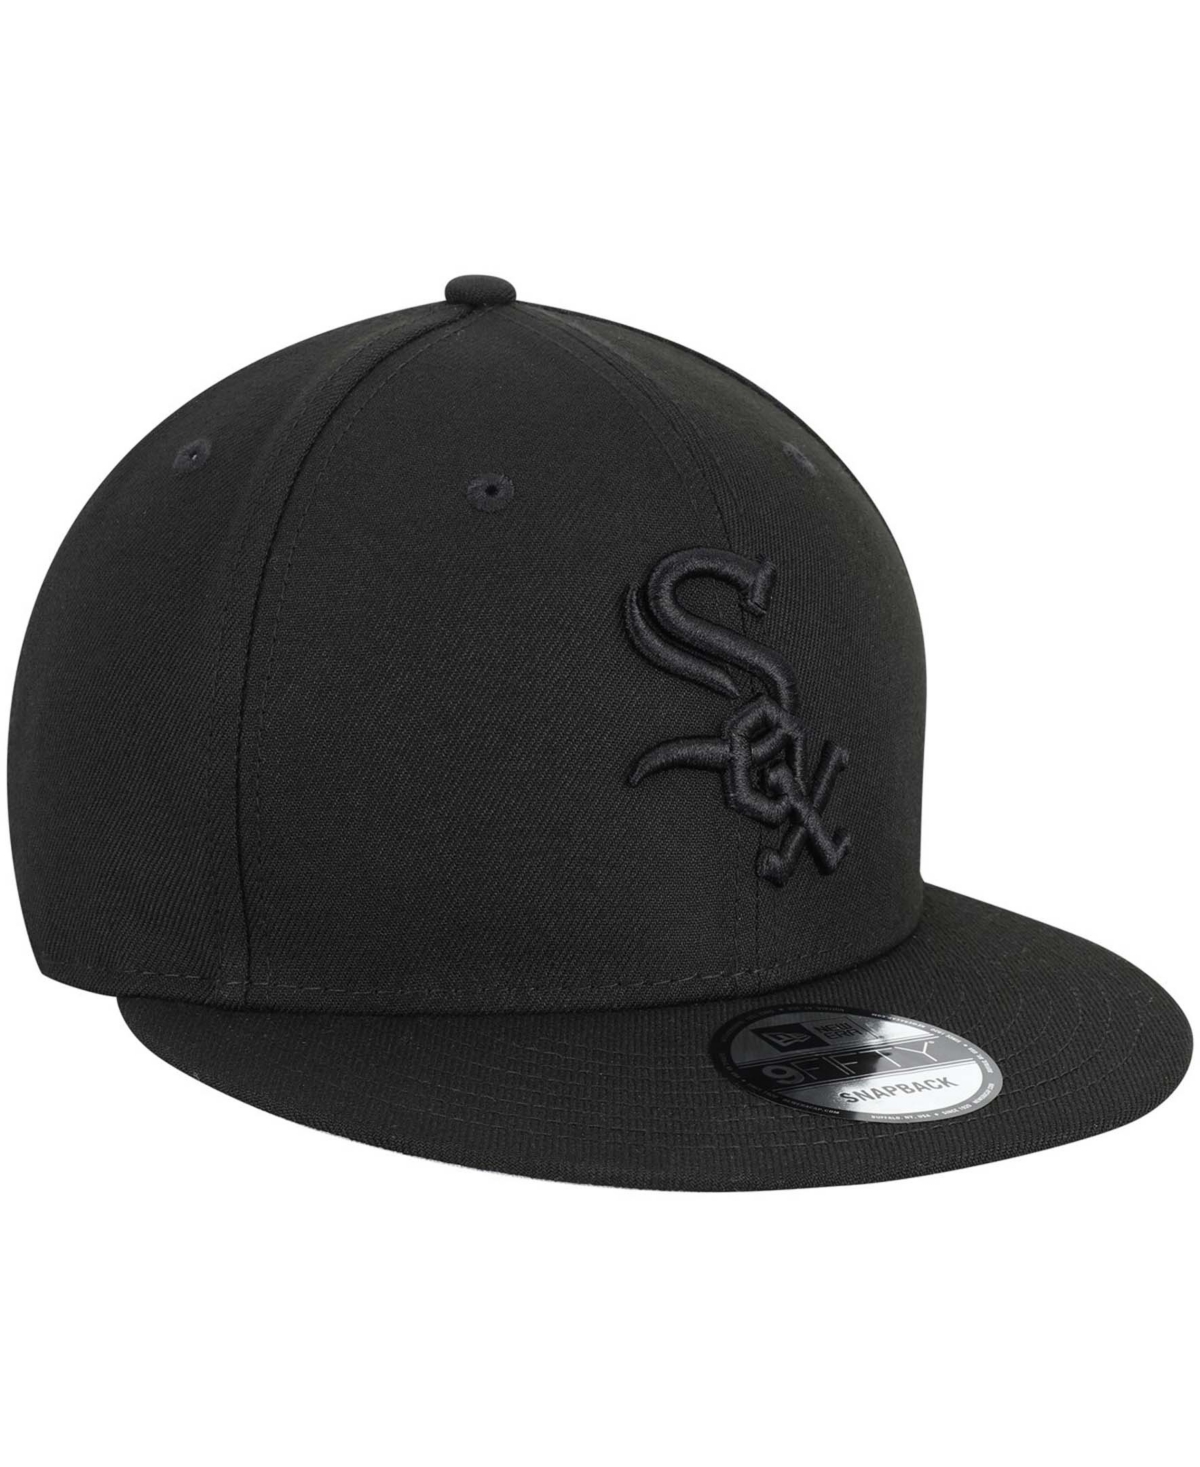 Shop New Era Chicago White Sox Black On Black 9fifty Team Snapback Adjustable Hat